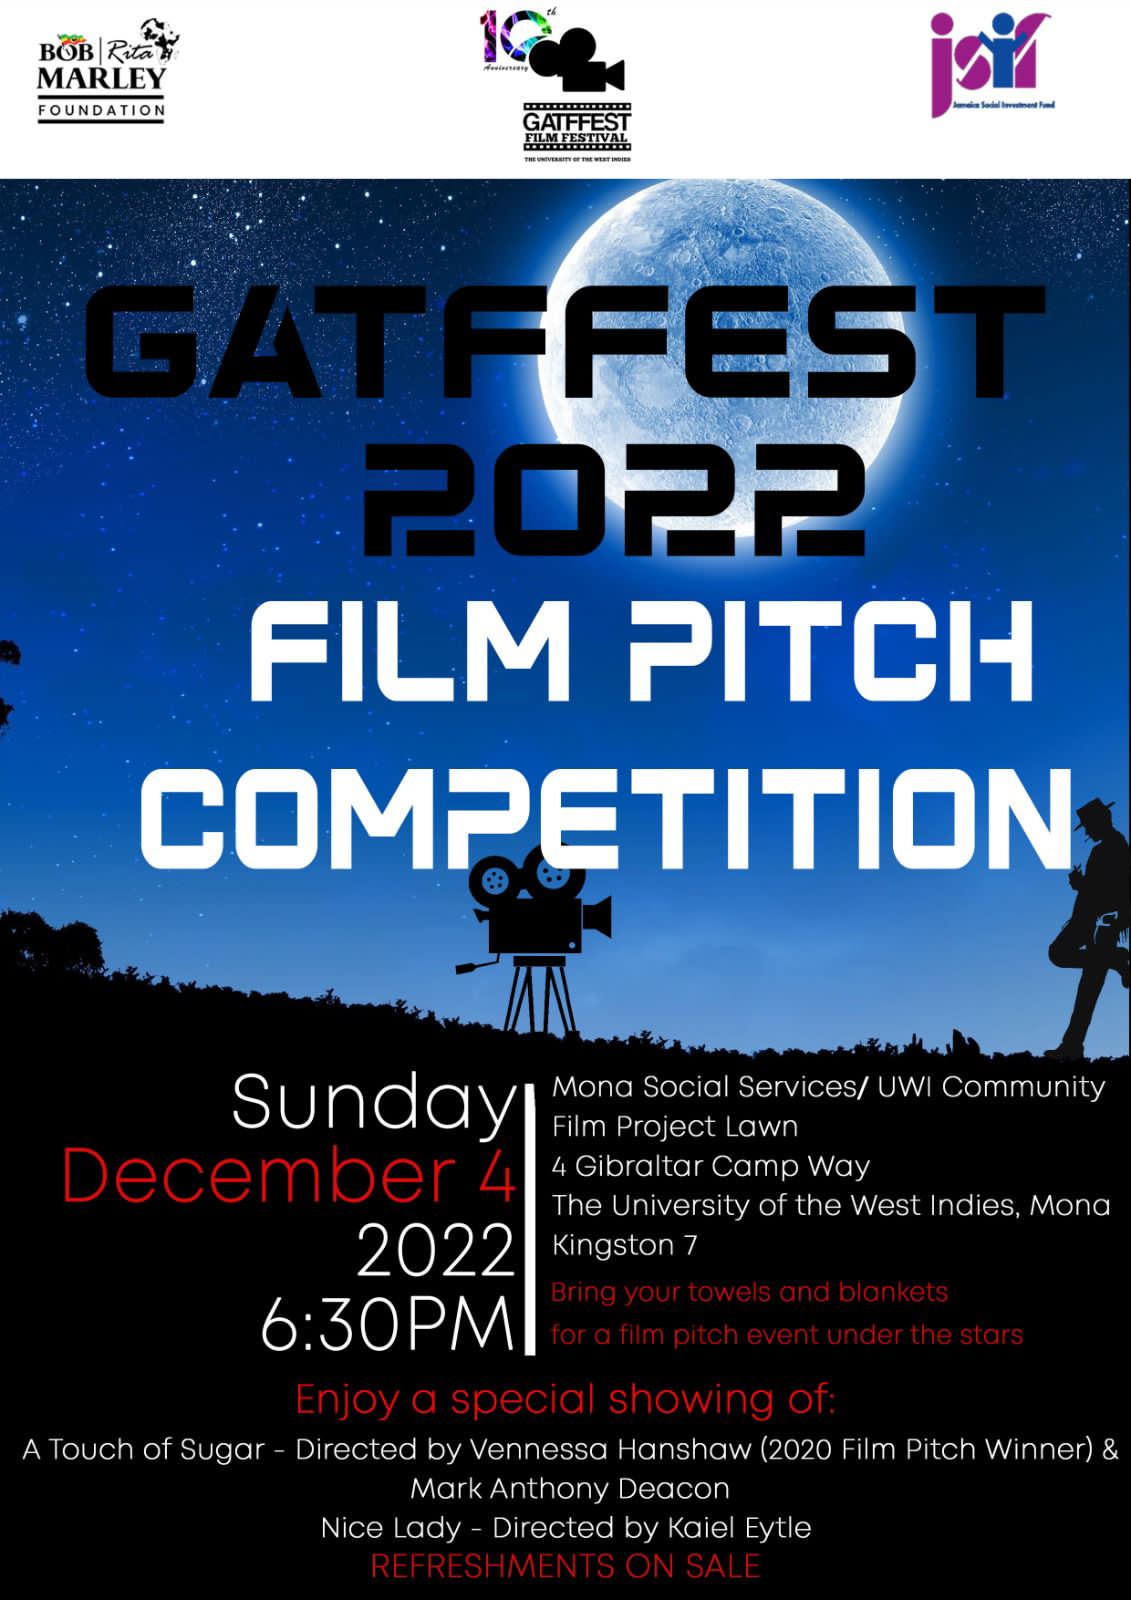 GATFFEST 2022 FILM PITCH COMPETITION